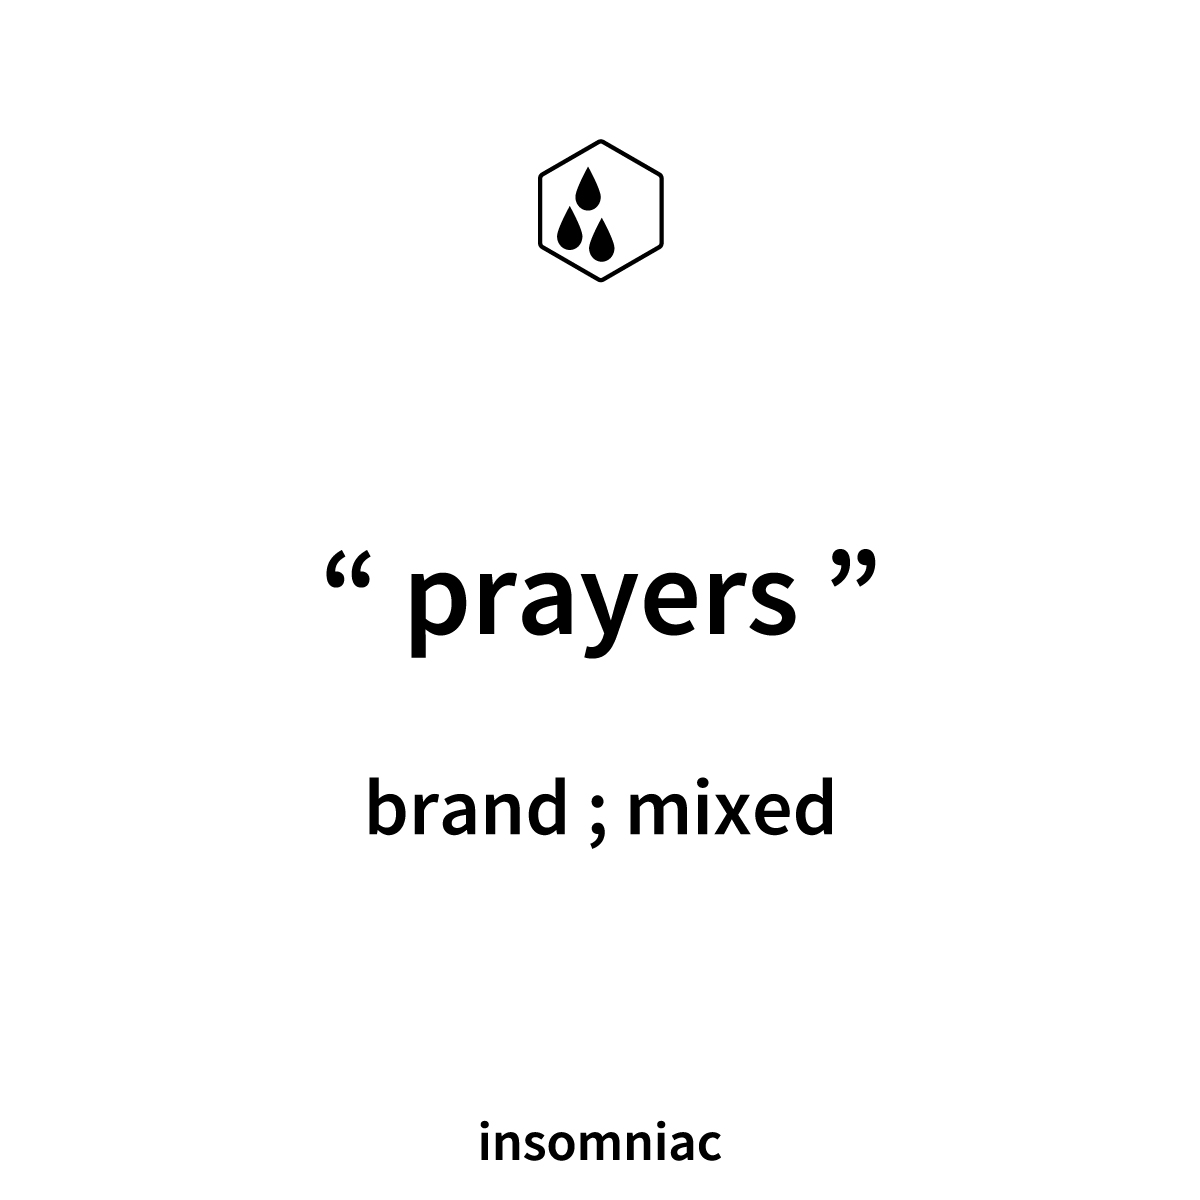 " prayers "